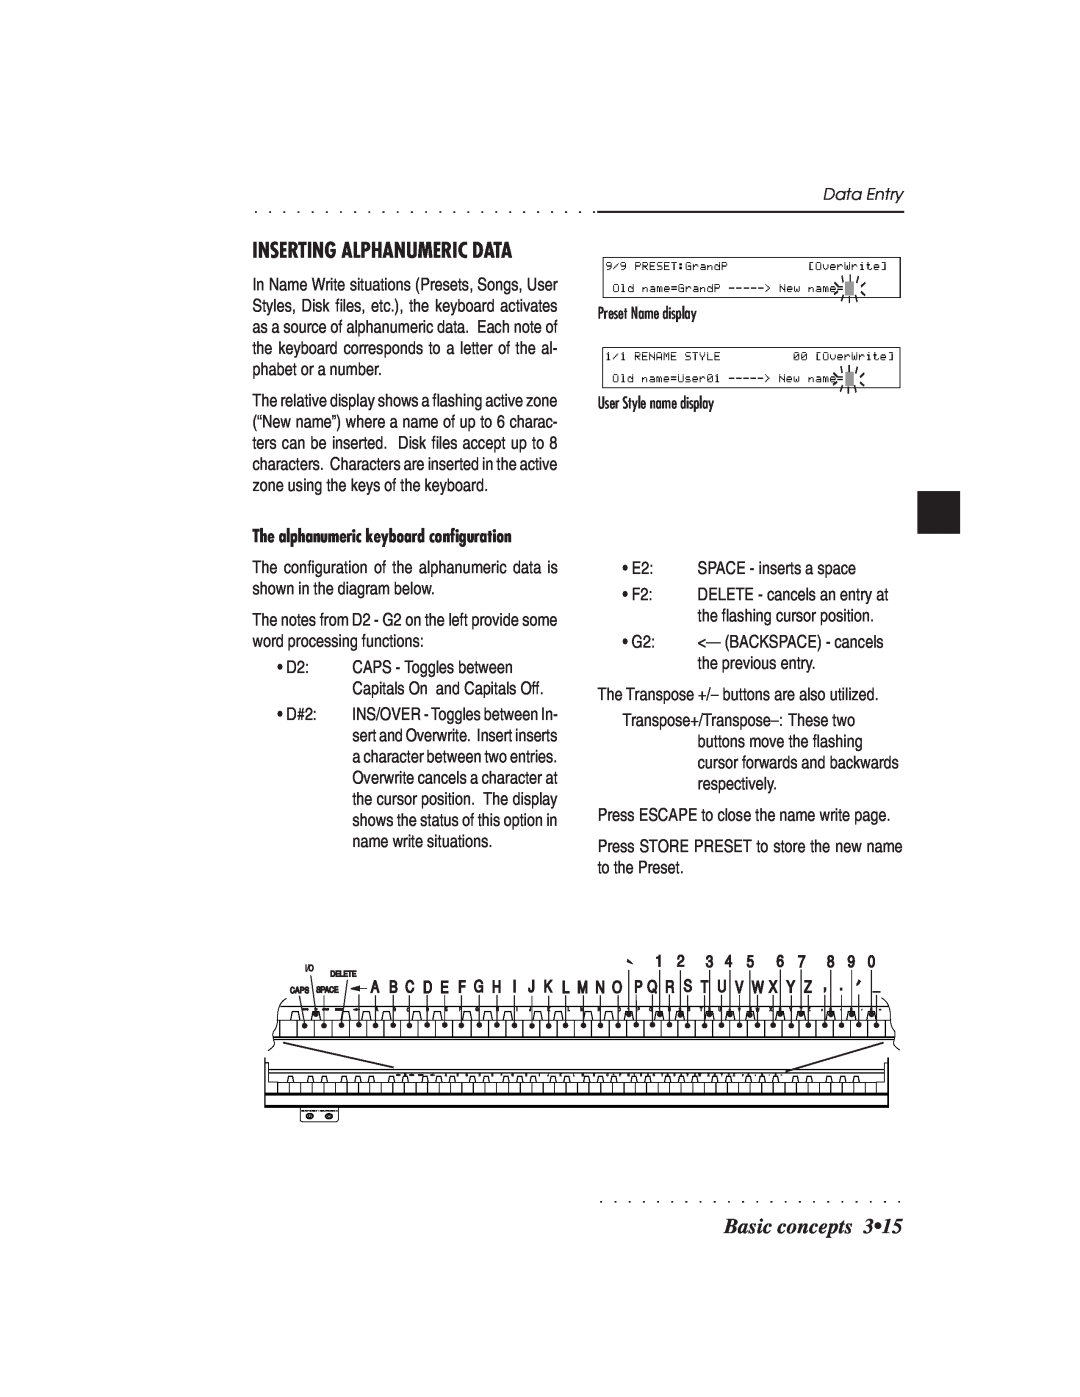 IBM PS1500 owner manual Basic concepts, Inserting Alphanumeric Data 